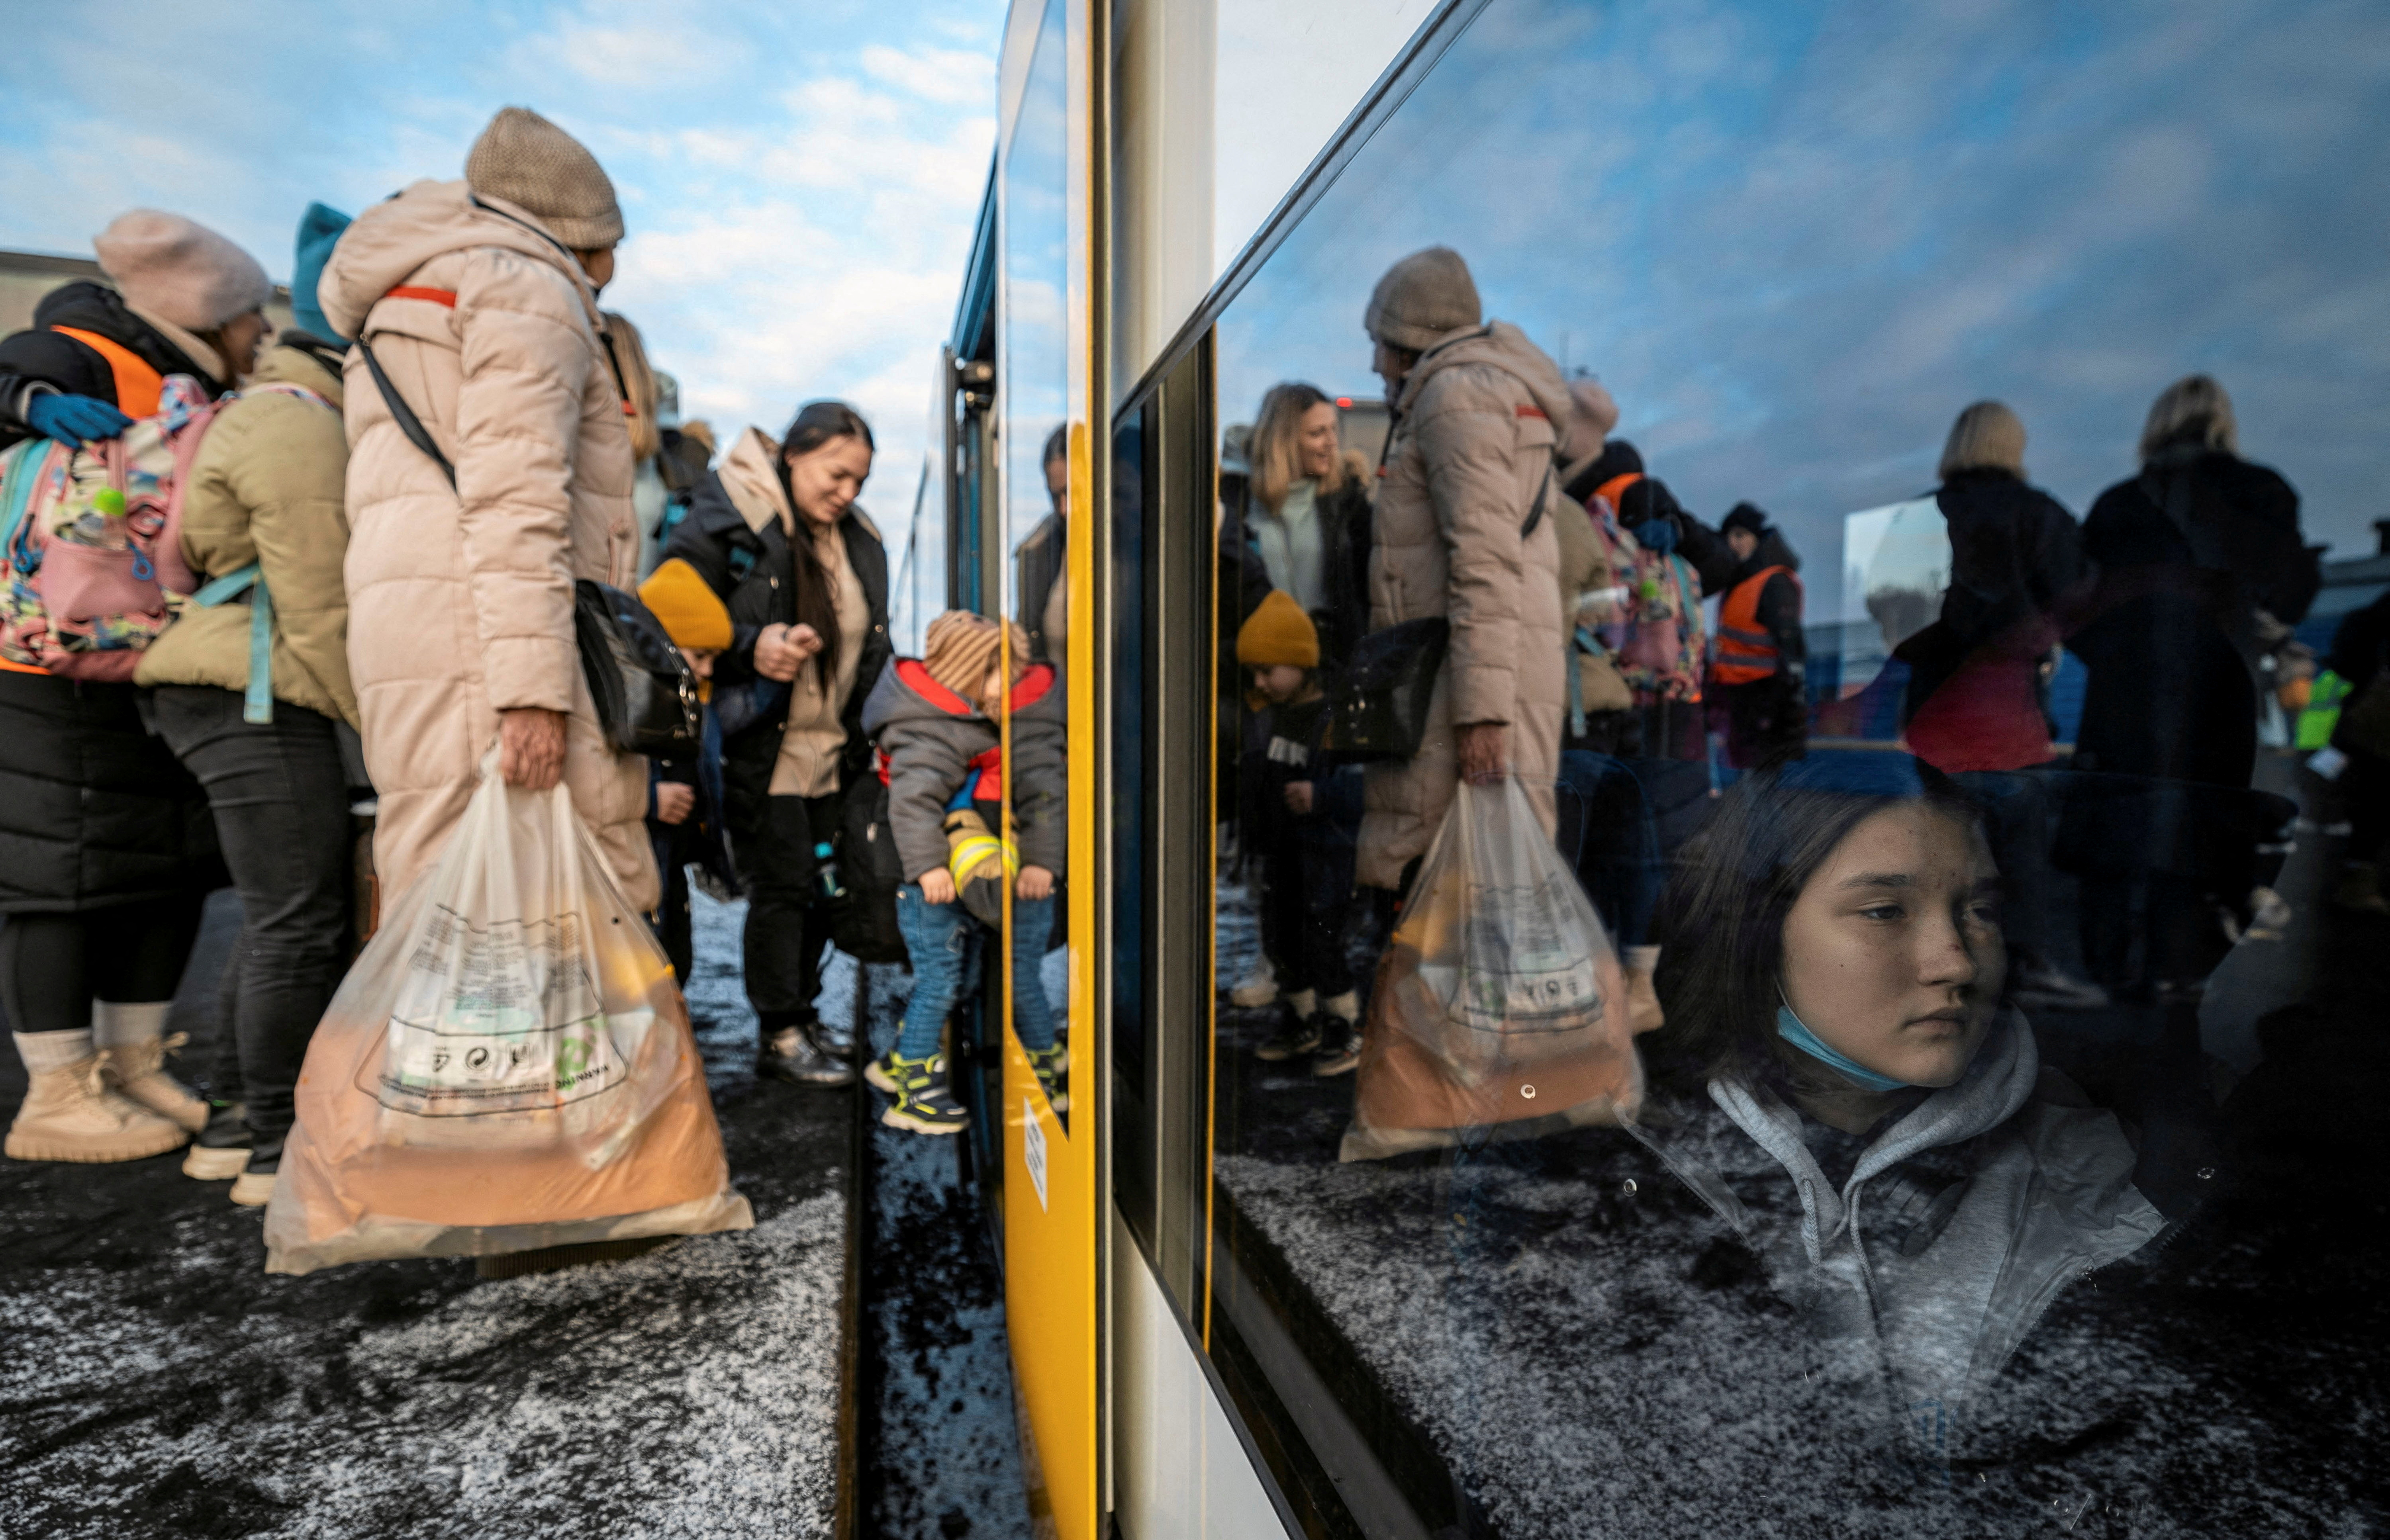 People fleeing Russia's invasion of Ukraine arrive in Poland